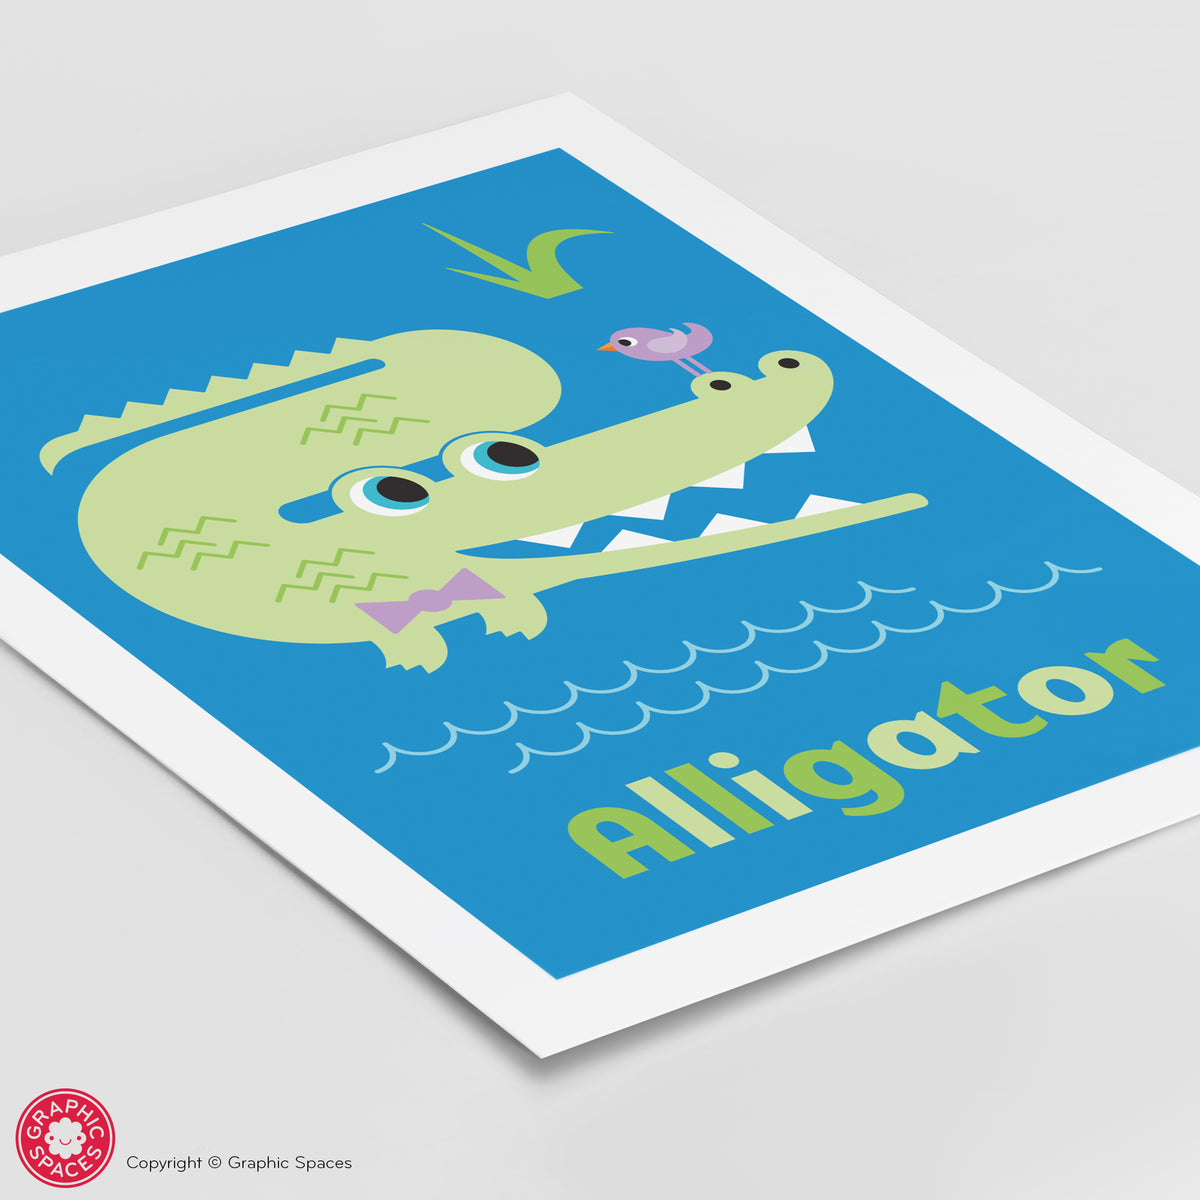 Alligator Art Print